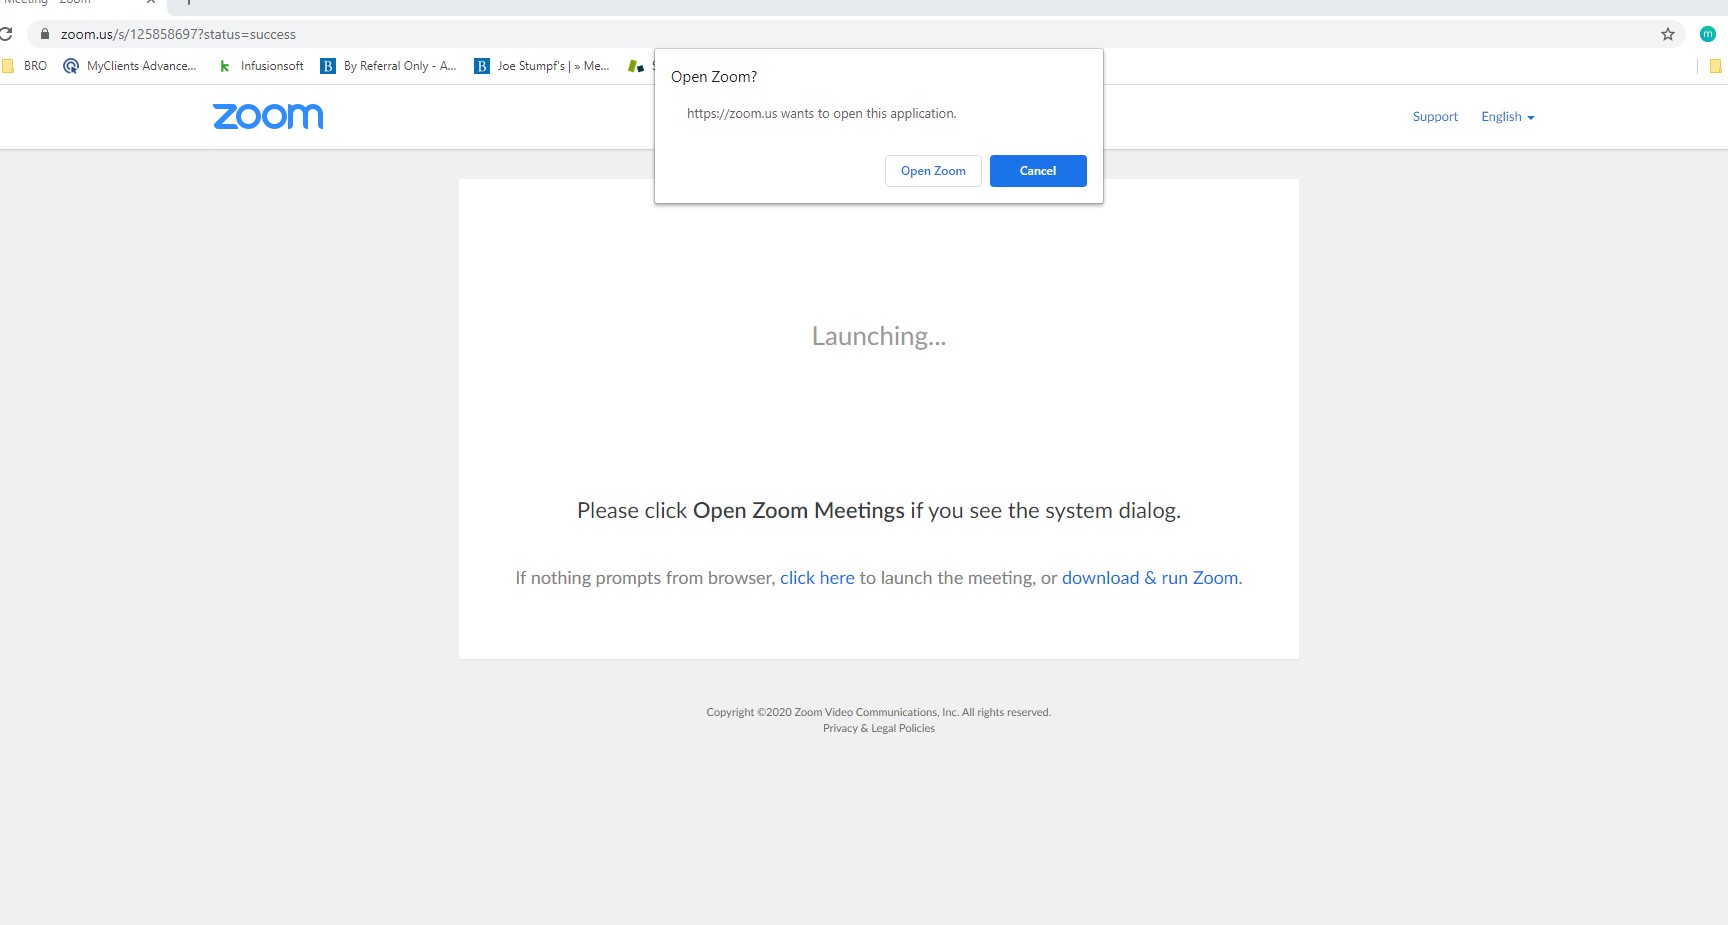 Launch_Meeting_-_Zoom_-_Google_Chrome_2020-03-18_1.jpg